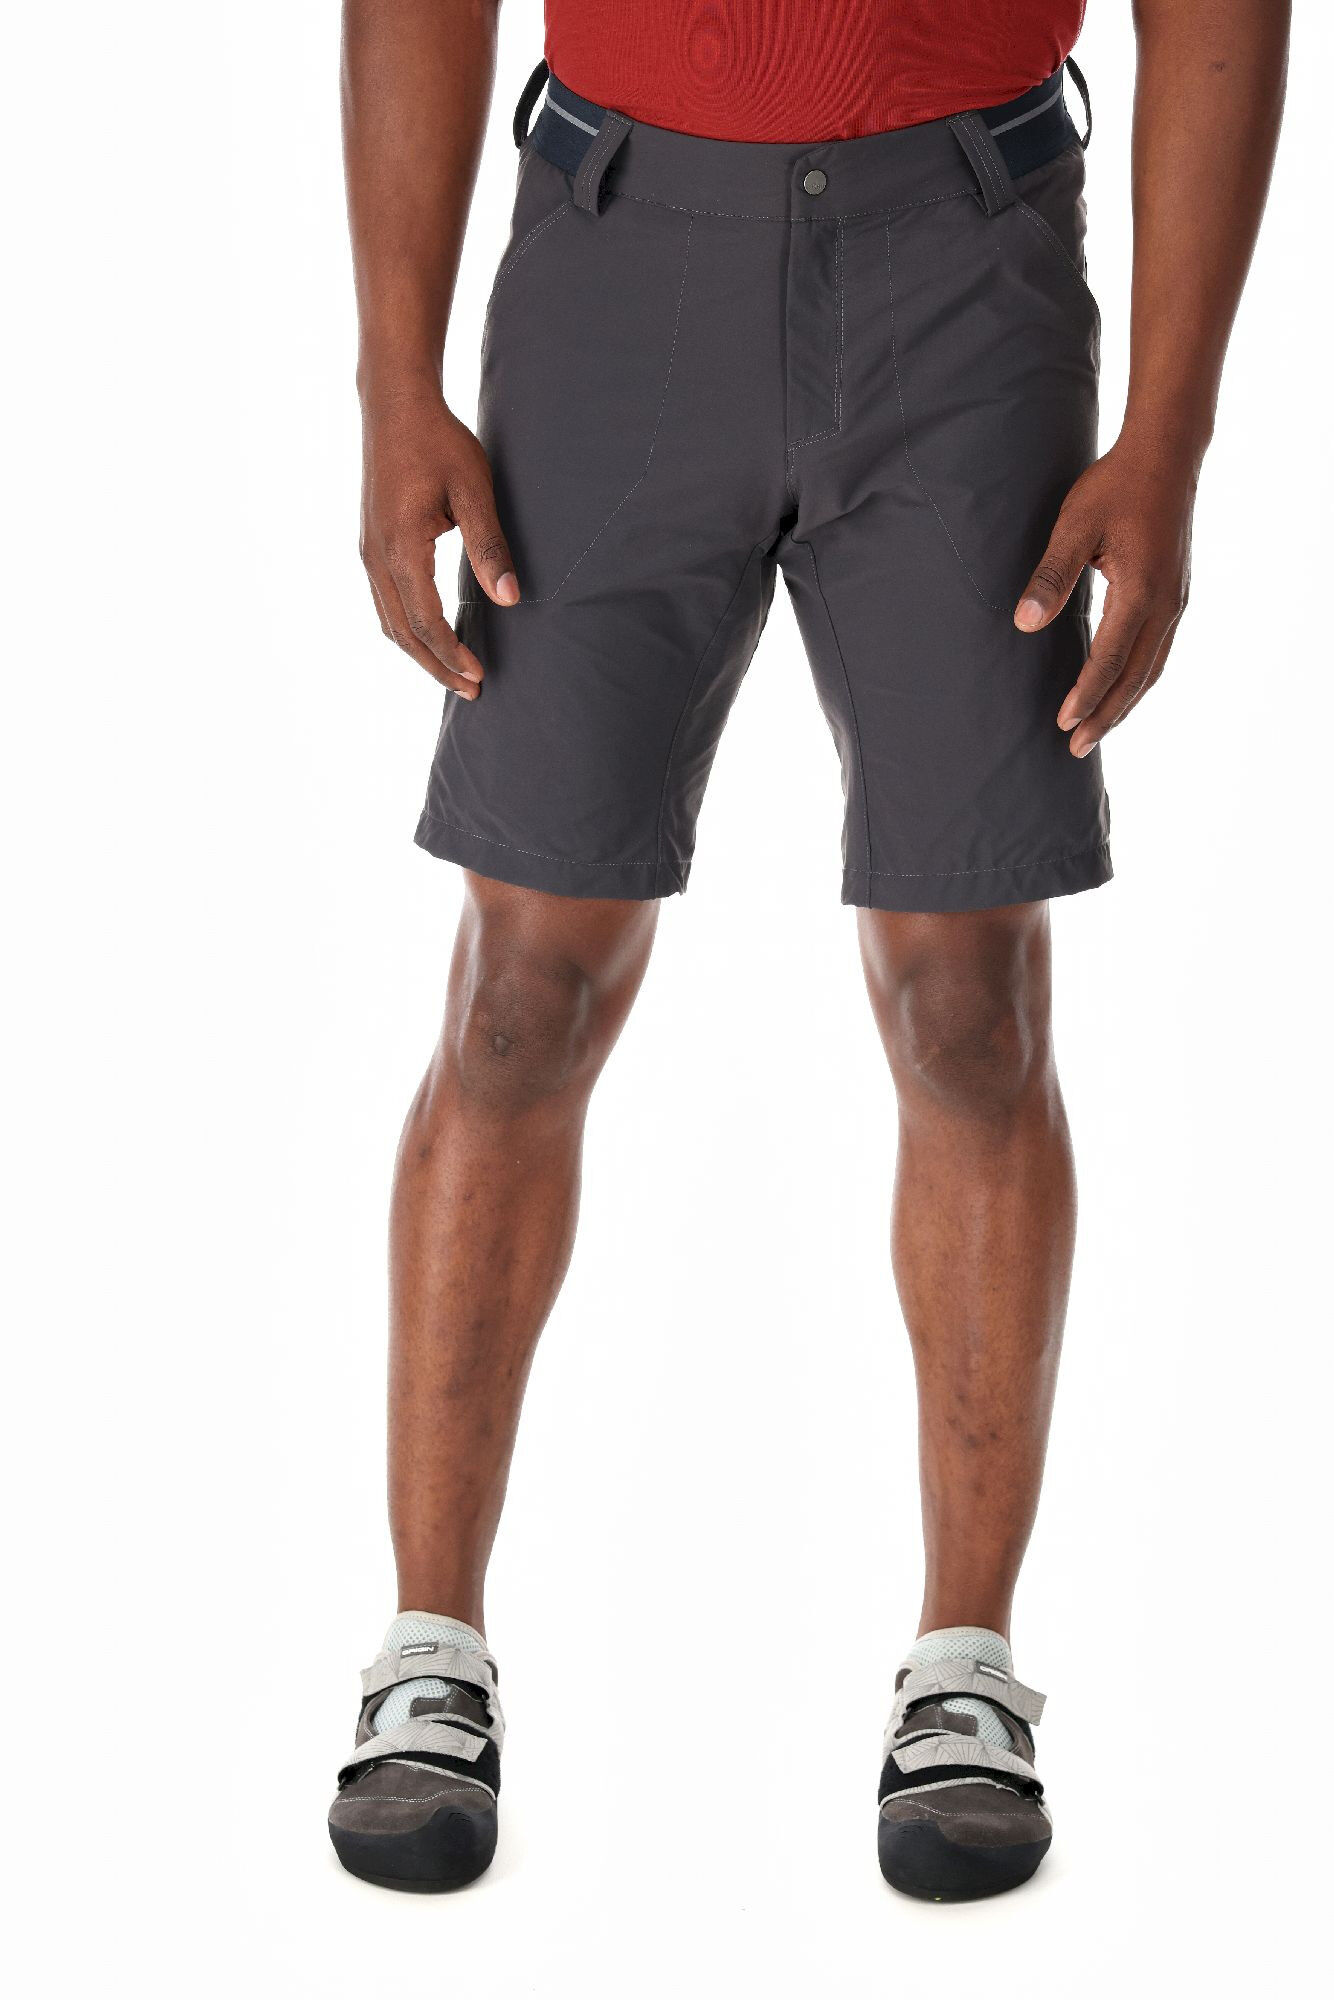 Rab Venant Shorts - Climbing shorts - Men's | Hardloop